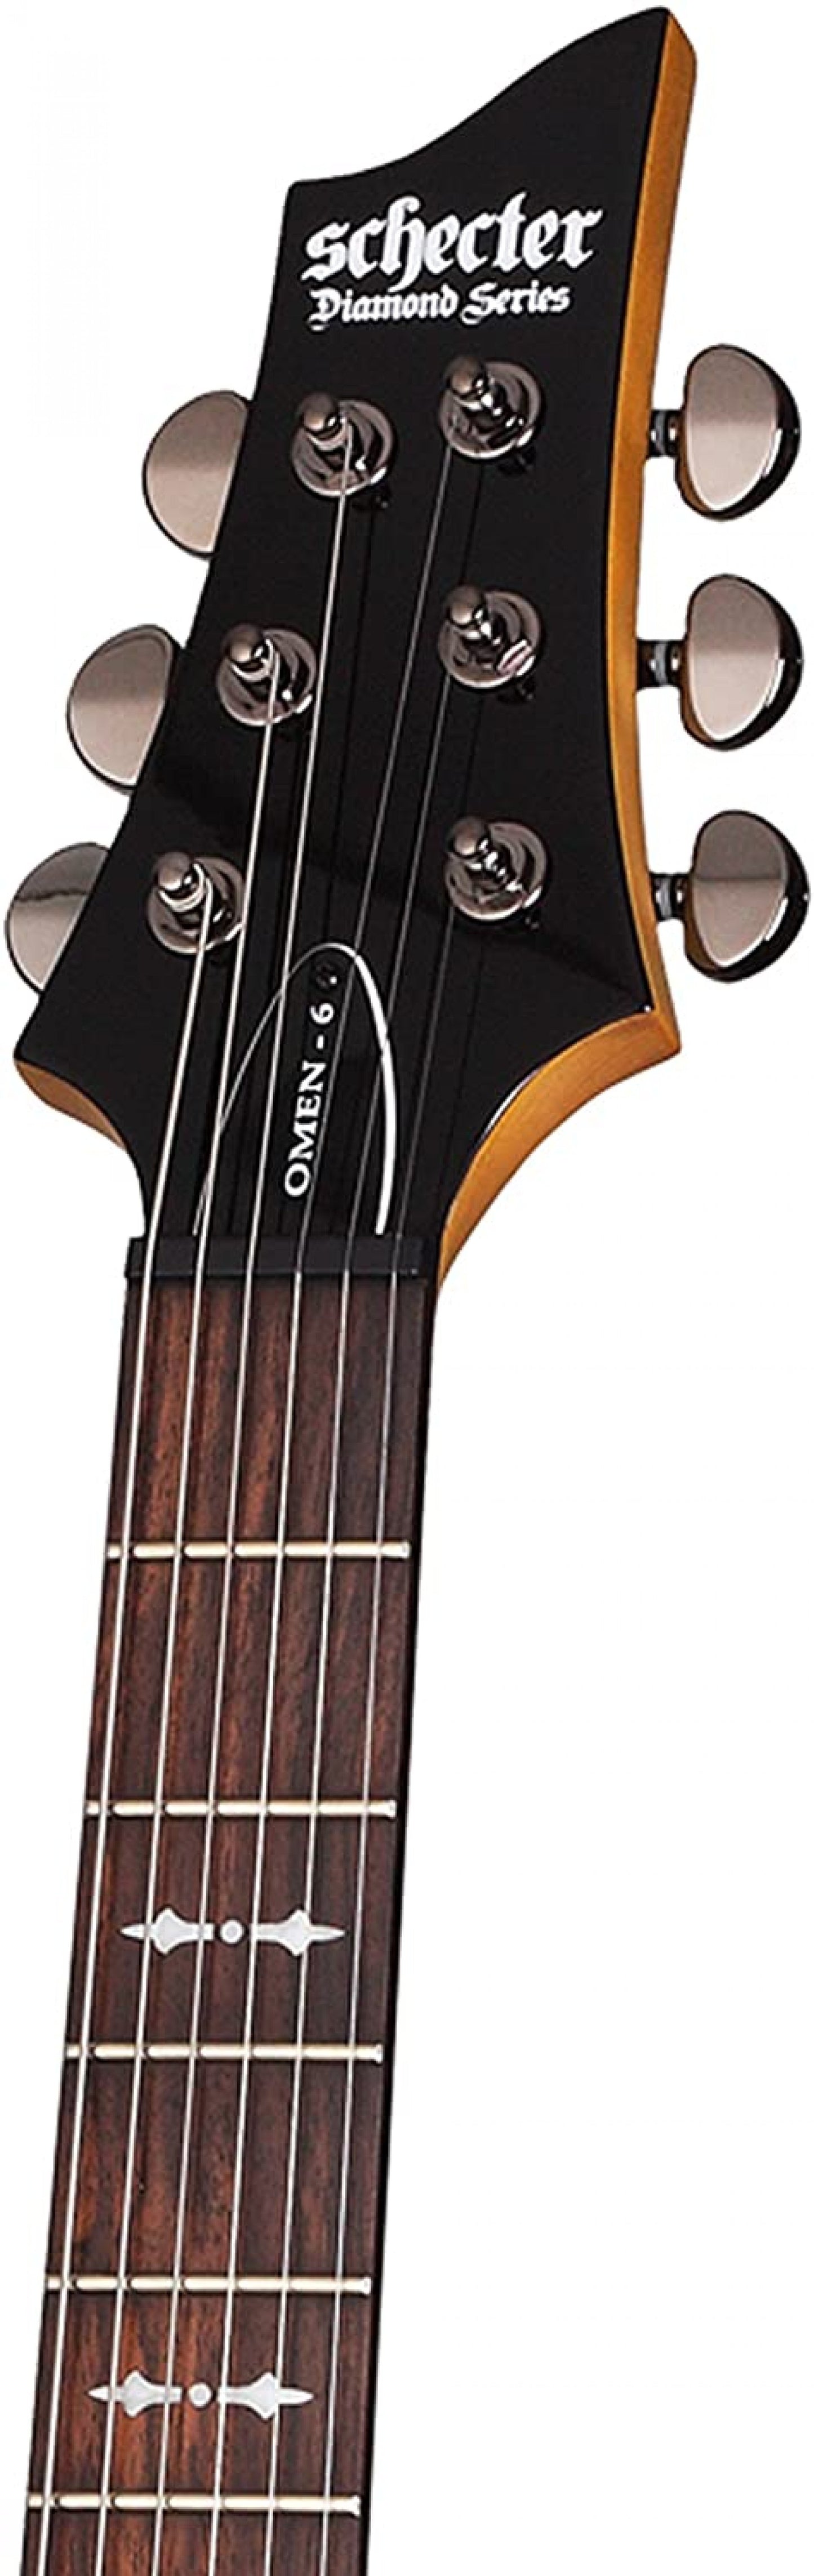 Schecter Omen-6 6-String Electric Guitar - Black